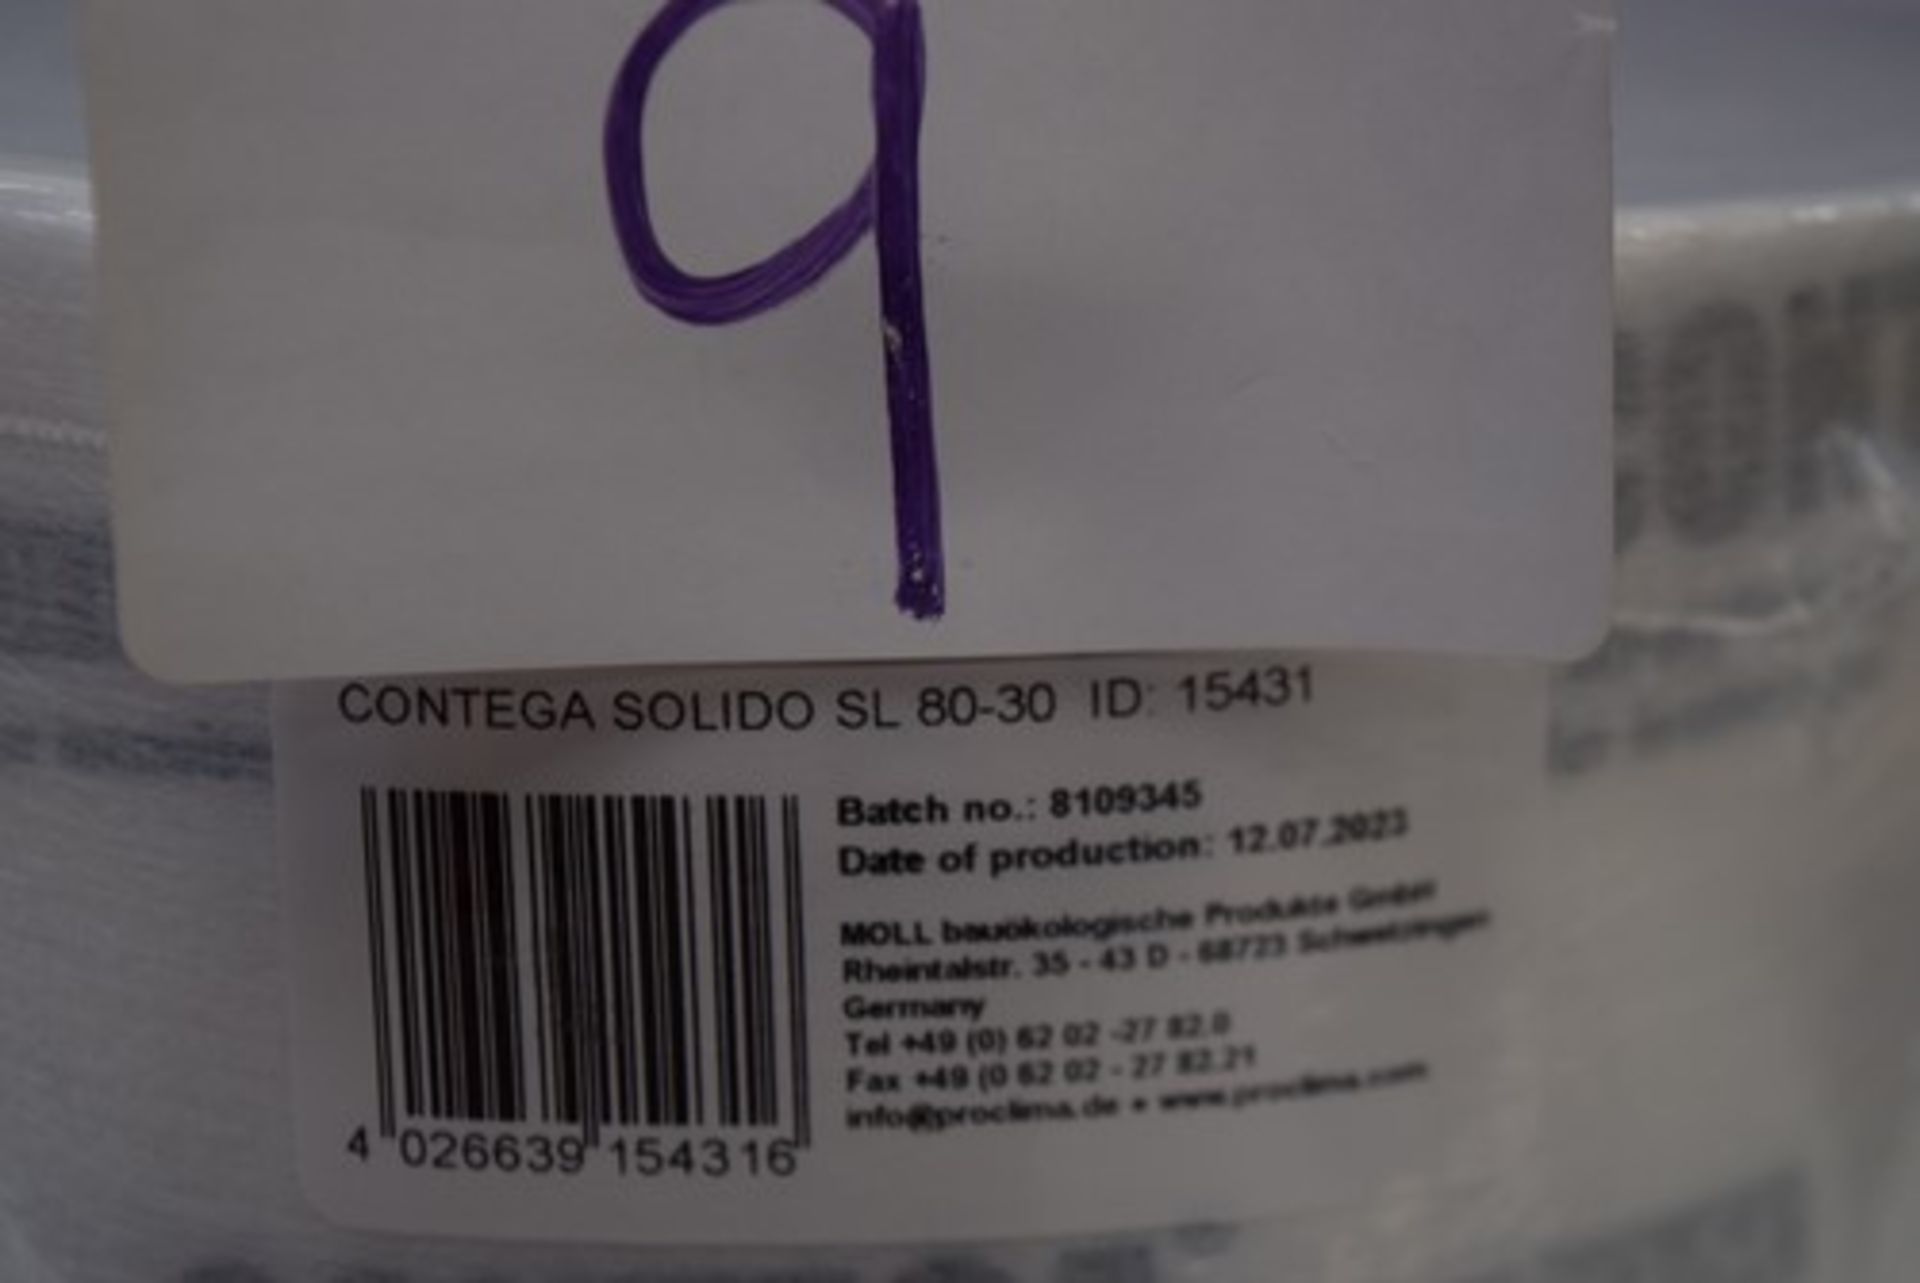 8 x rolls of Contega Solido SL sealing tape, 80mm x 30m - new (GS27B) - Image 2 of 2